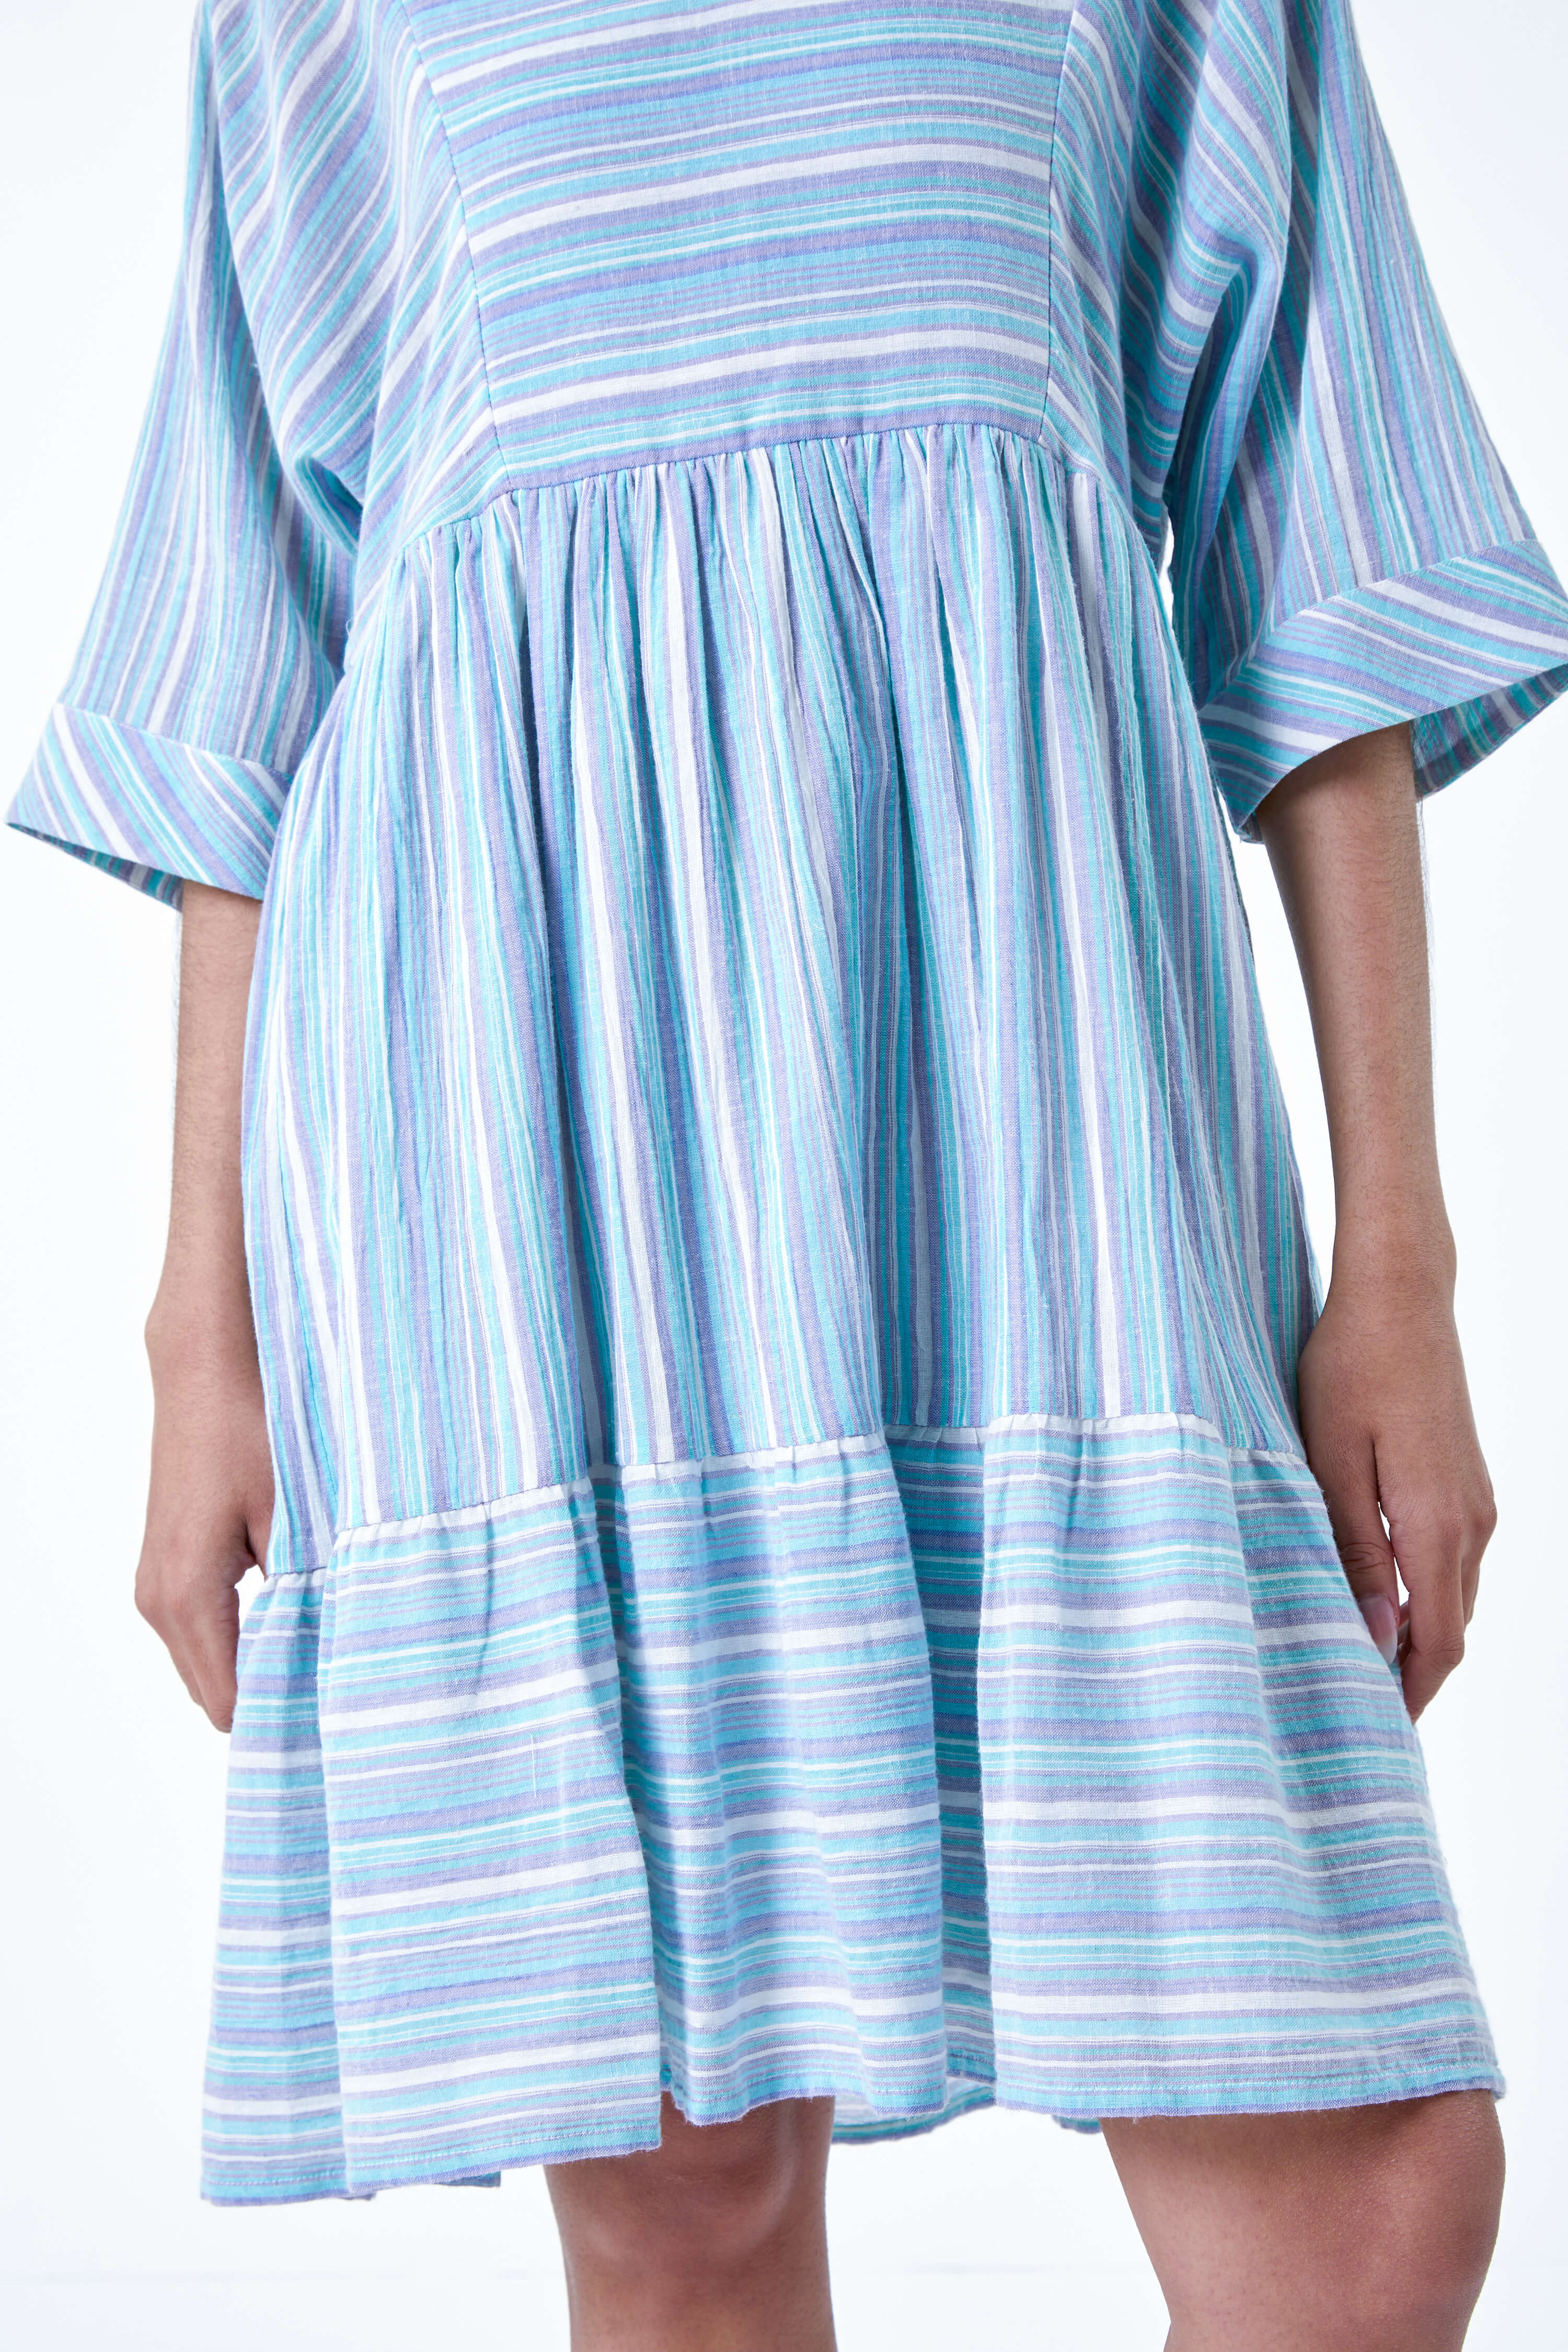 AQUAMARINE Cotton Stripe Print Smock Dress, Image 5 of 5